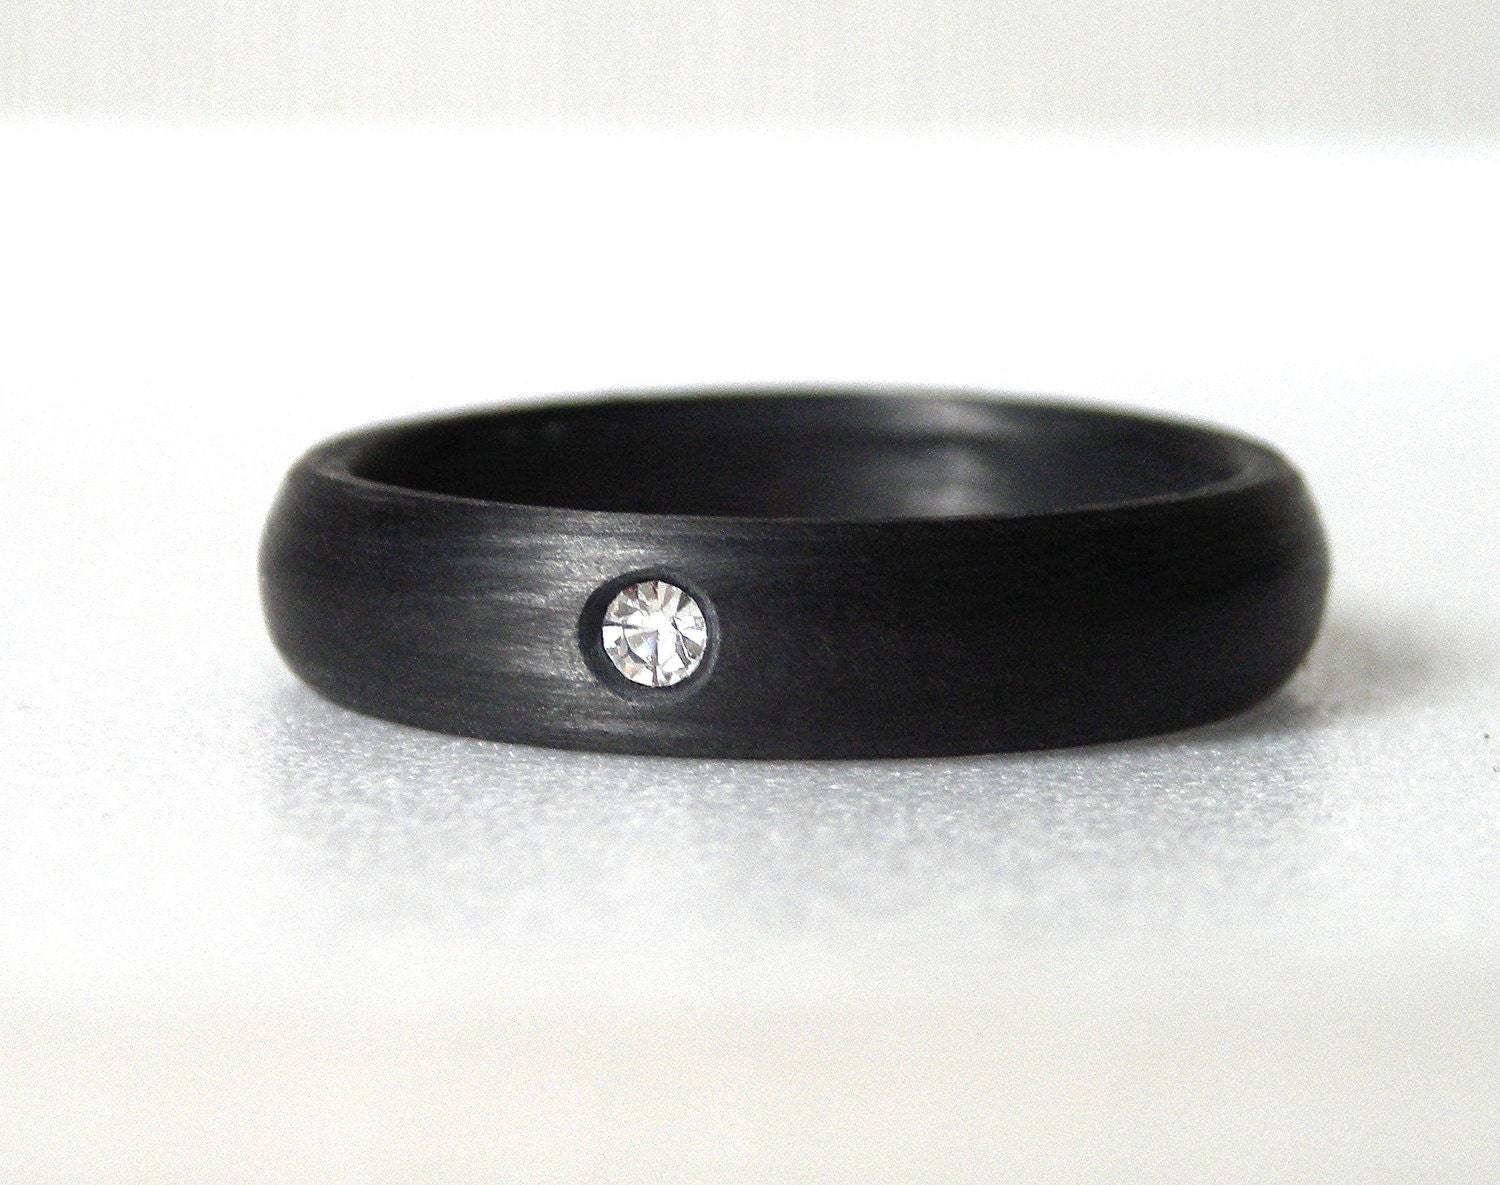 Carbon Fiber Swarovski jeweled engagement ring From Nickelfree